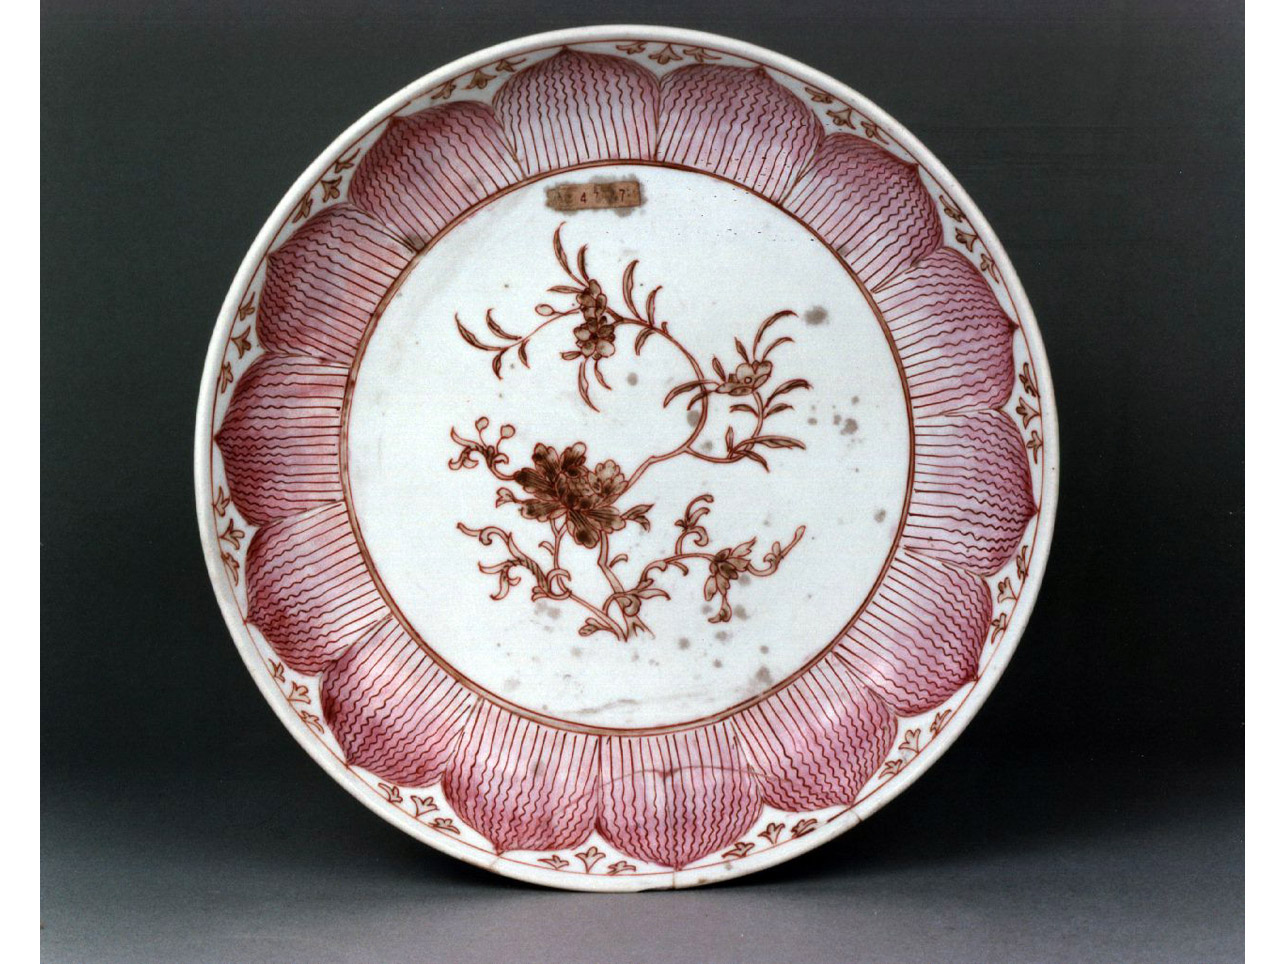 motivi decorativi floreali (piatto) - manifattura cinese (sec. XVIII)